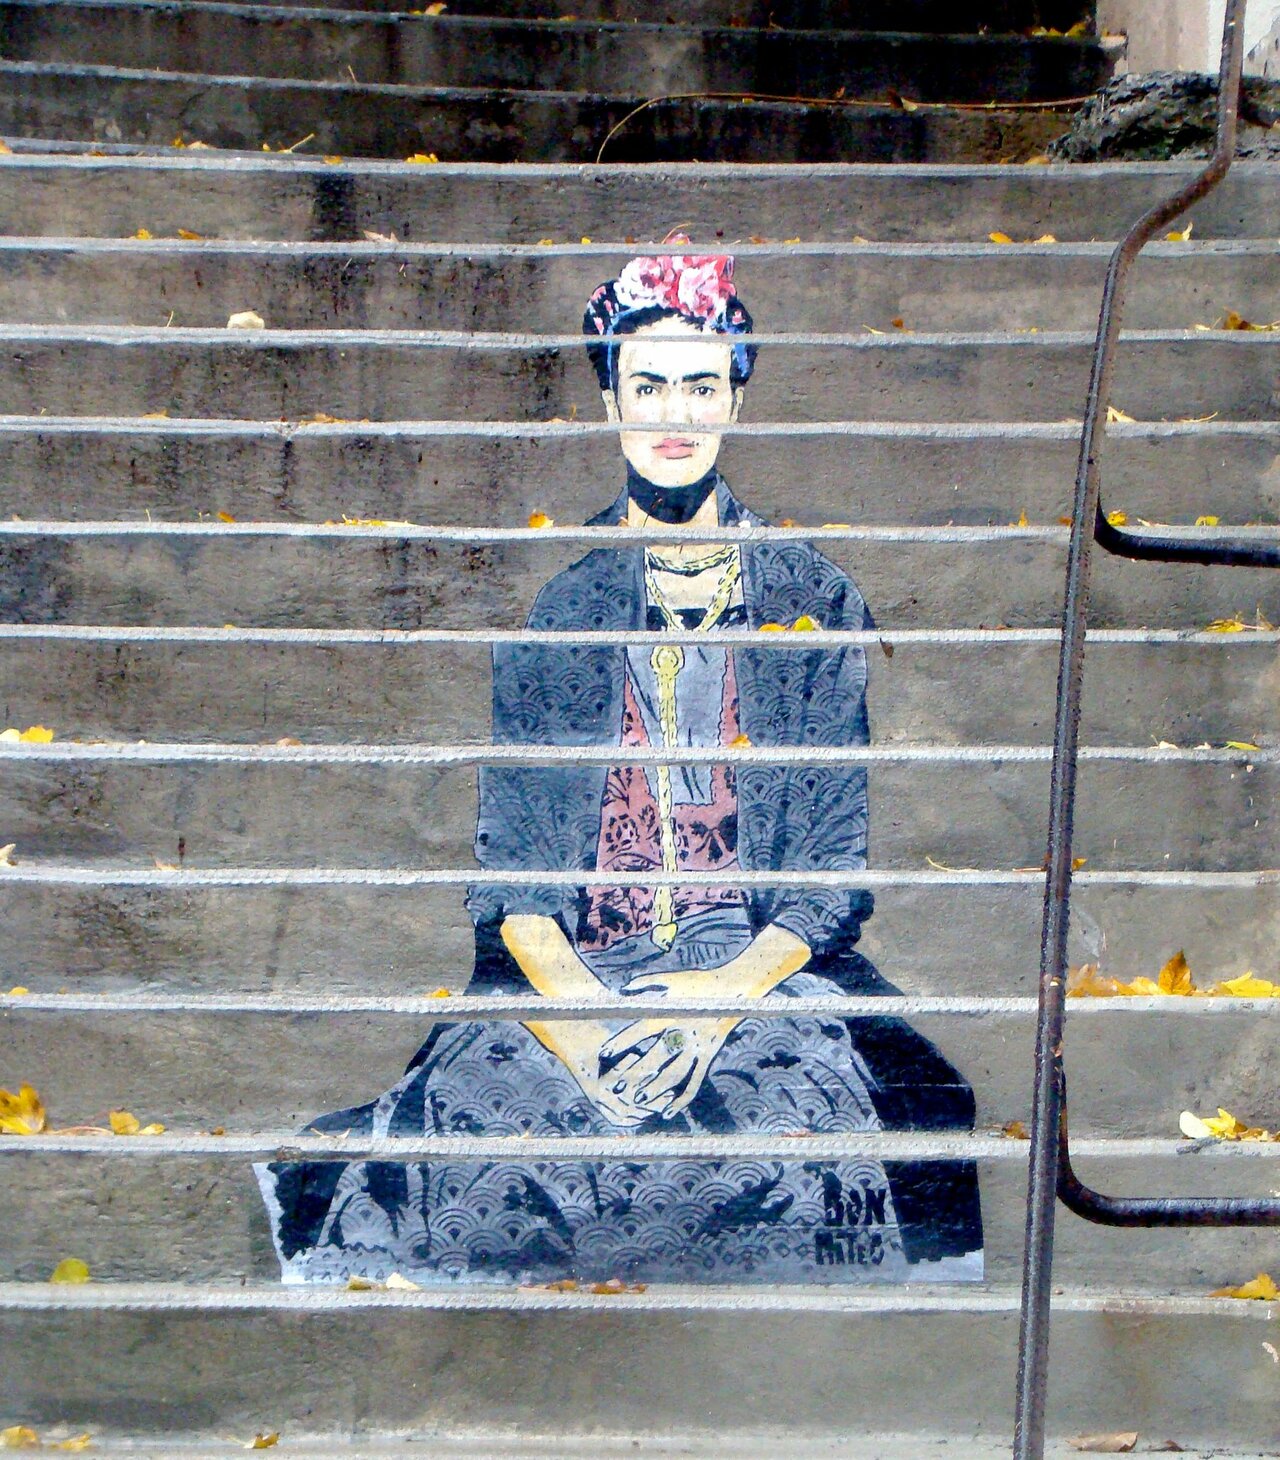 'Frida Kahlo', stairway street art by Don Mateo. #StreetArt #Graffiti #Mural https://t.co/Qxhb4FiJD9